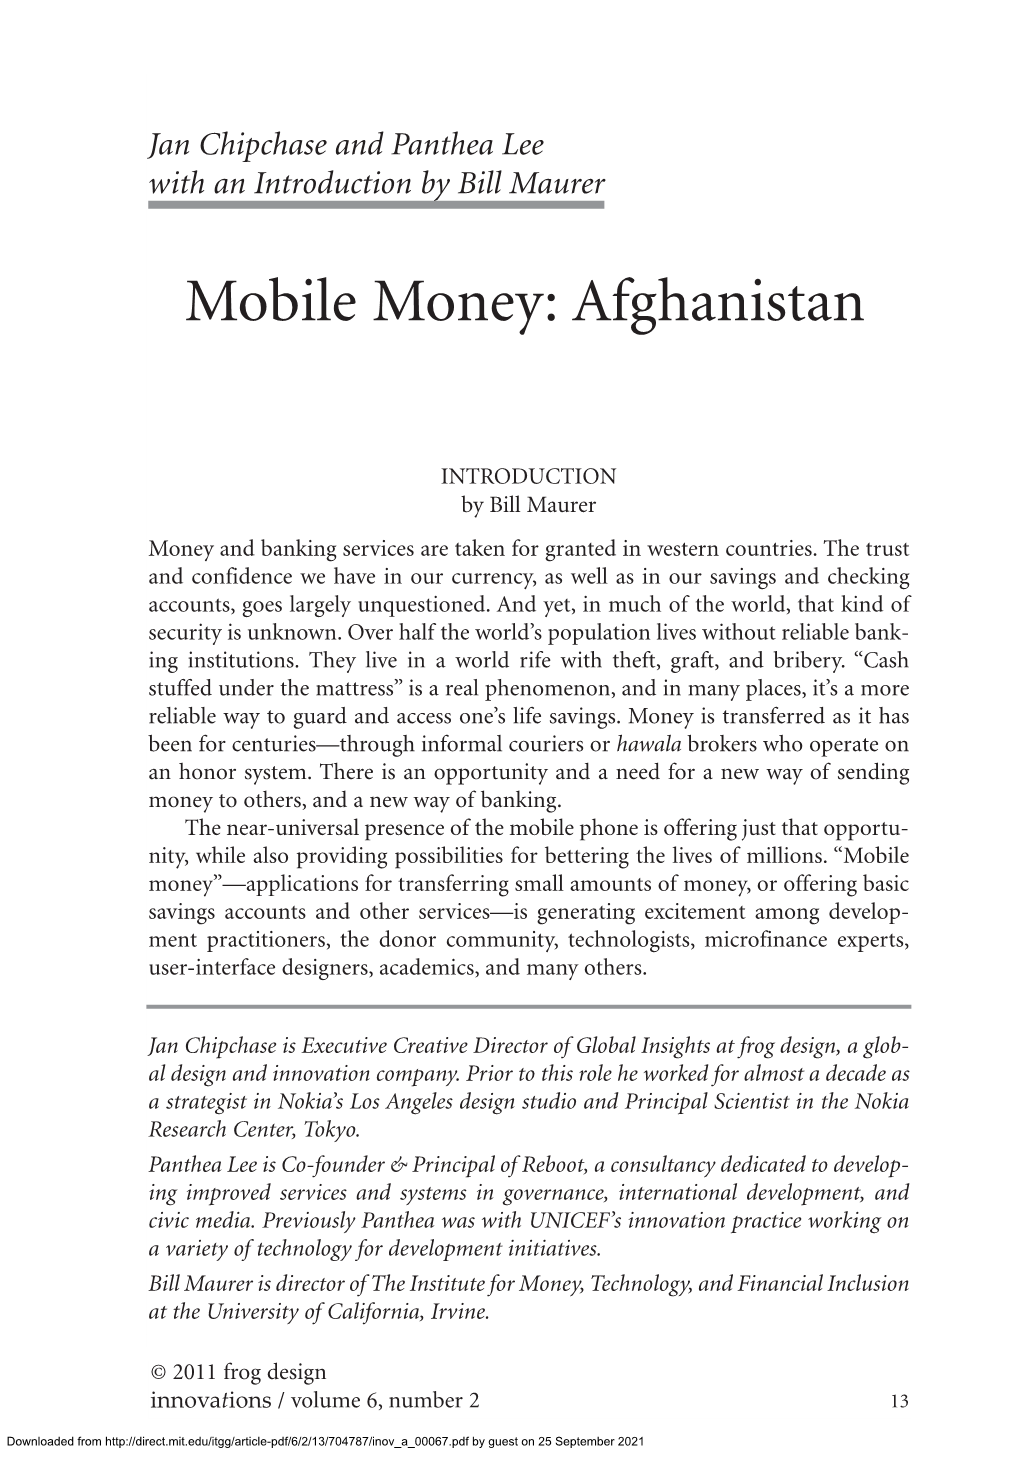 Mobile Money: Afghanistan